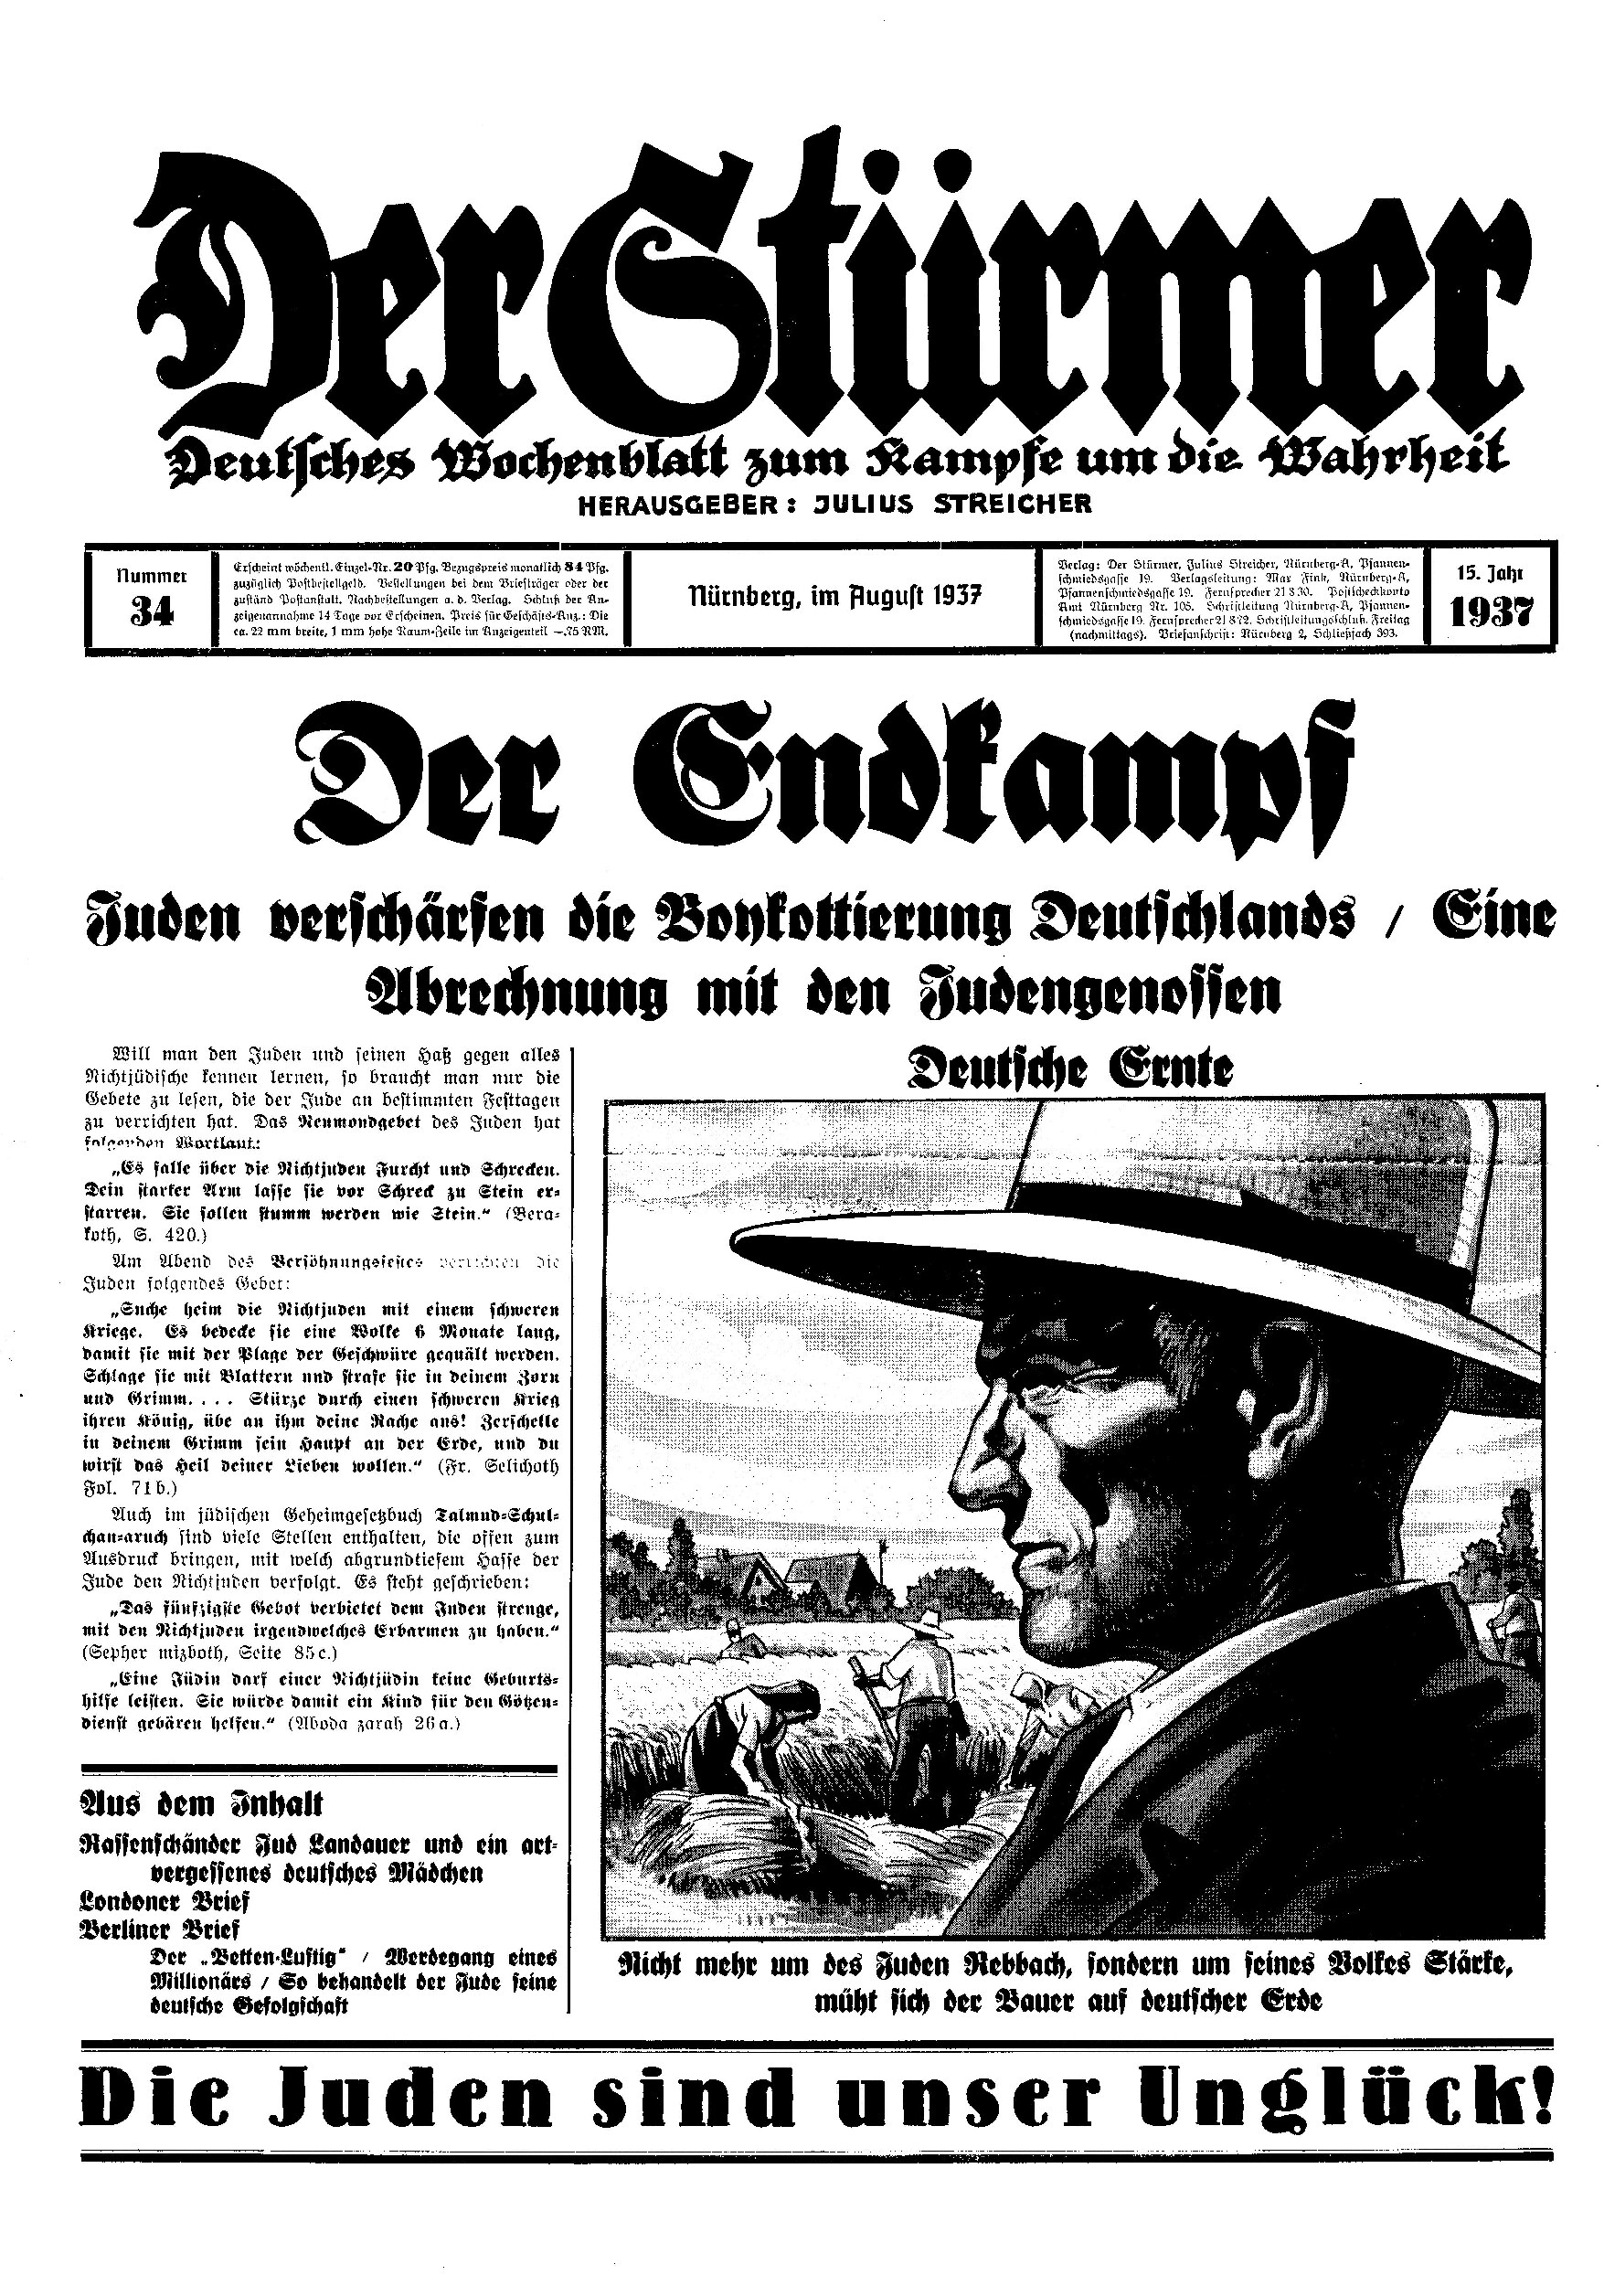 Der Stürmer - 1937 Nr. 34 - Der Endkampf